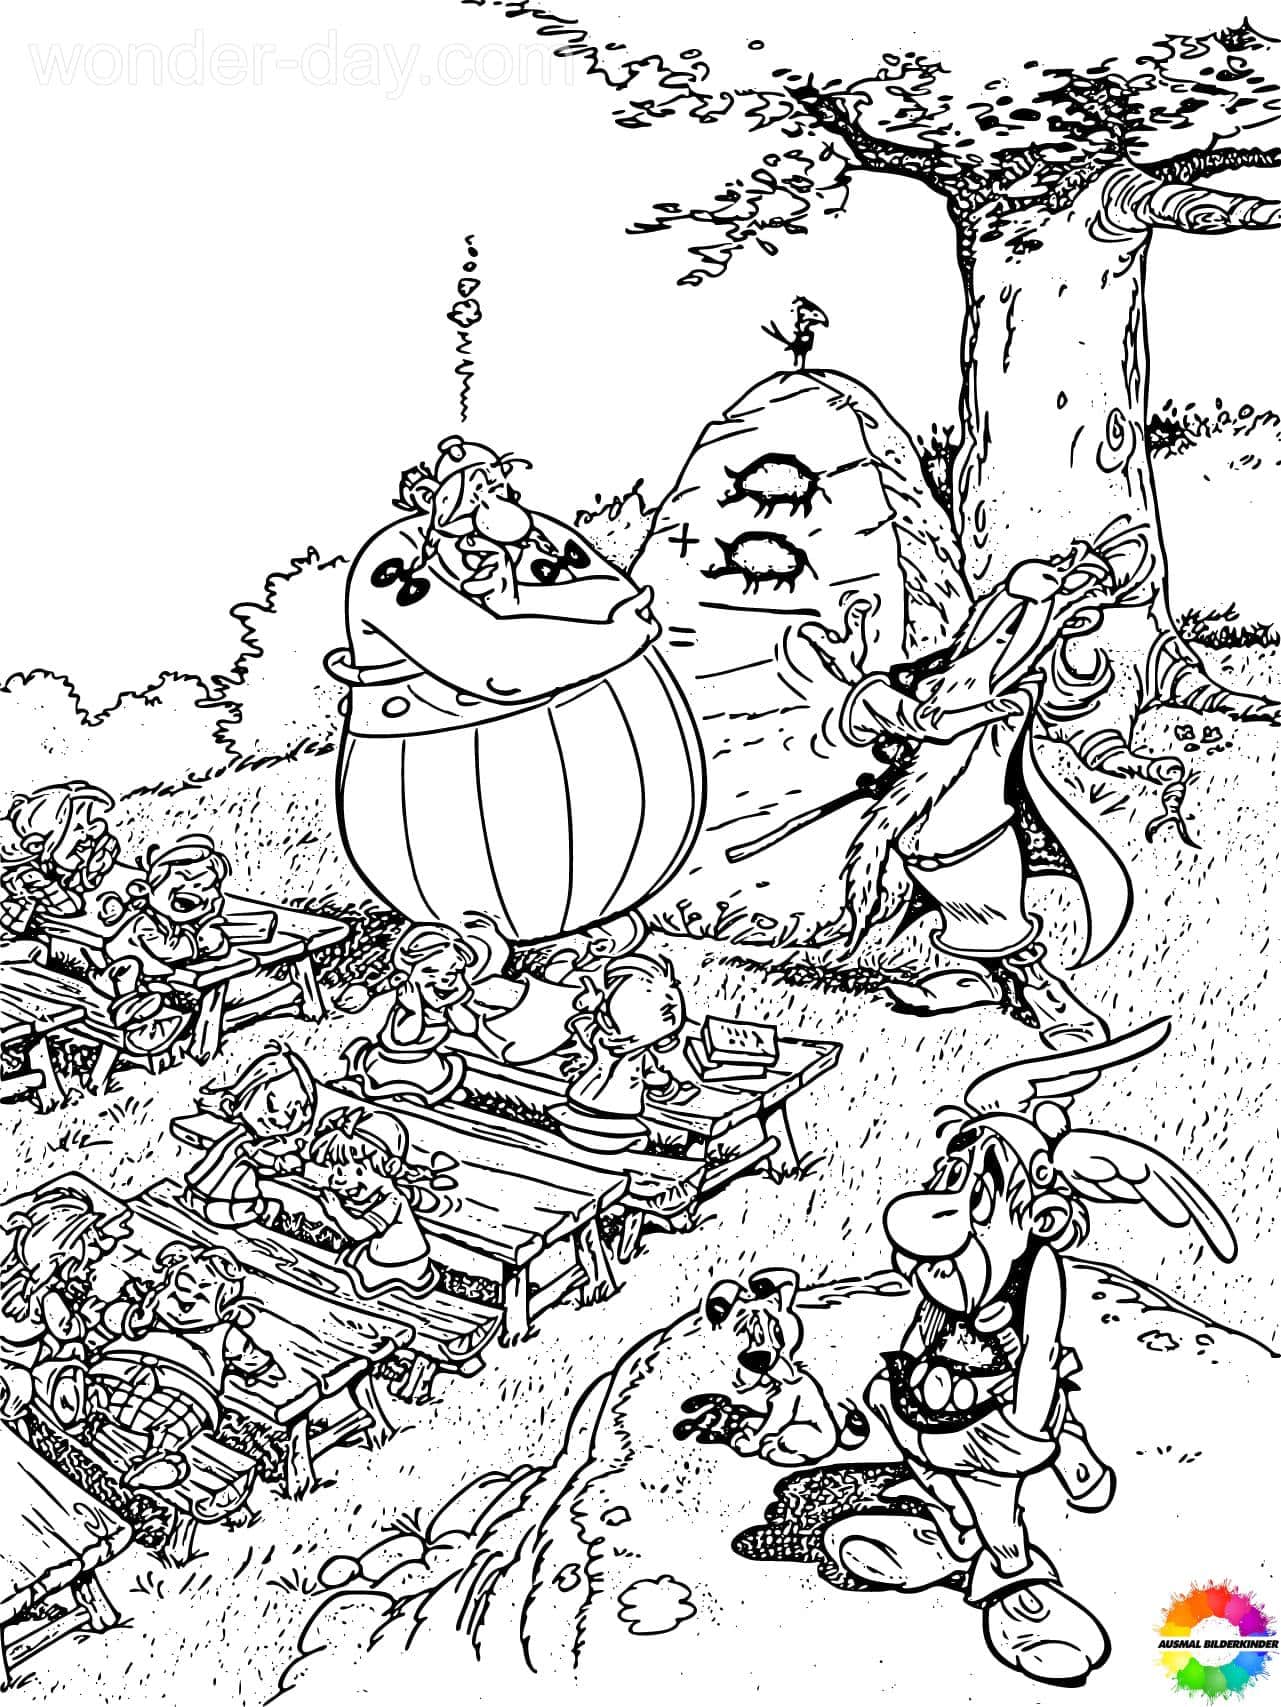 Asterix-and-Obelix-Ausmalbilder-ausmalbilderkinder-de-4